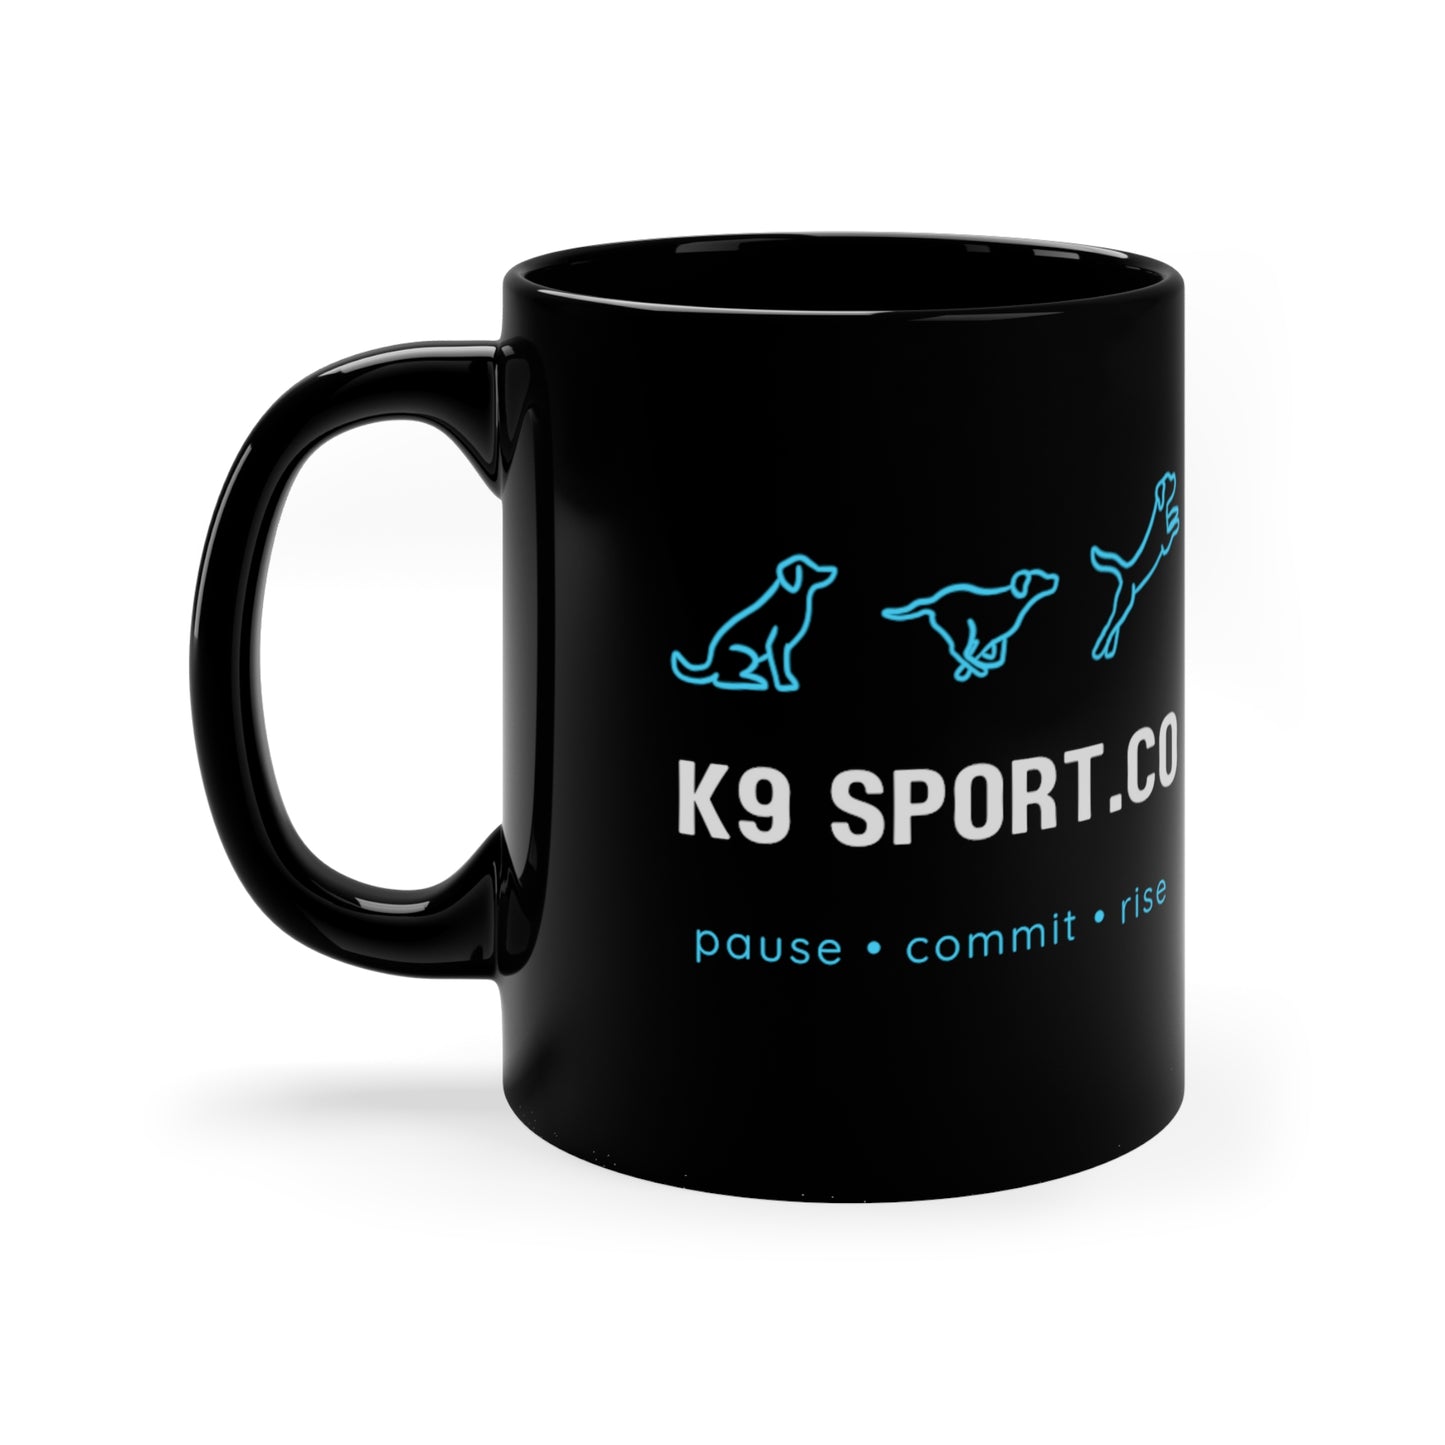 K9 Sport.co Mug